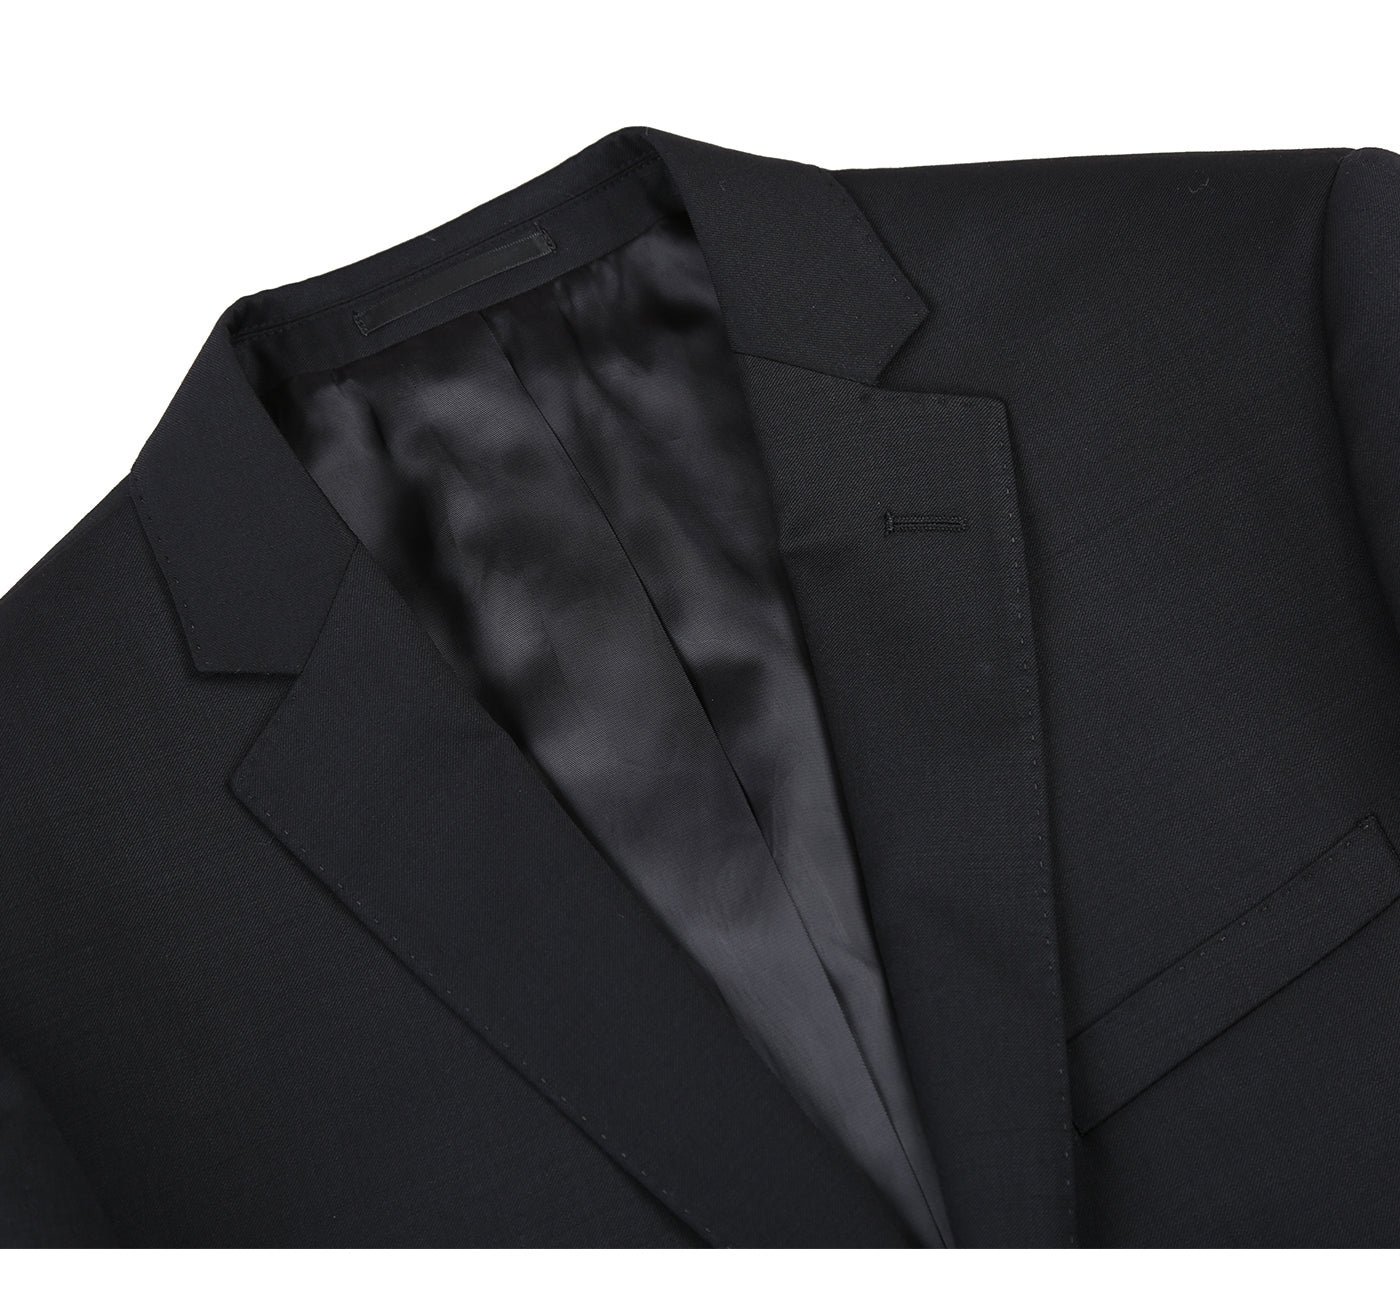 Men’s Slim Fit Suit in Virgin Wool with Nano Tech 4